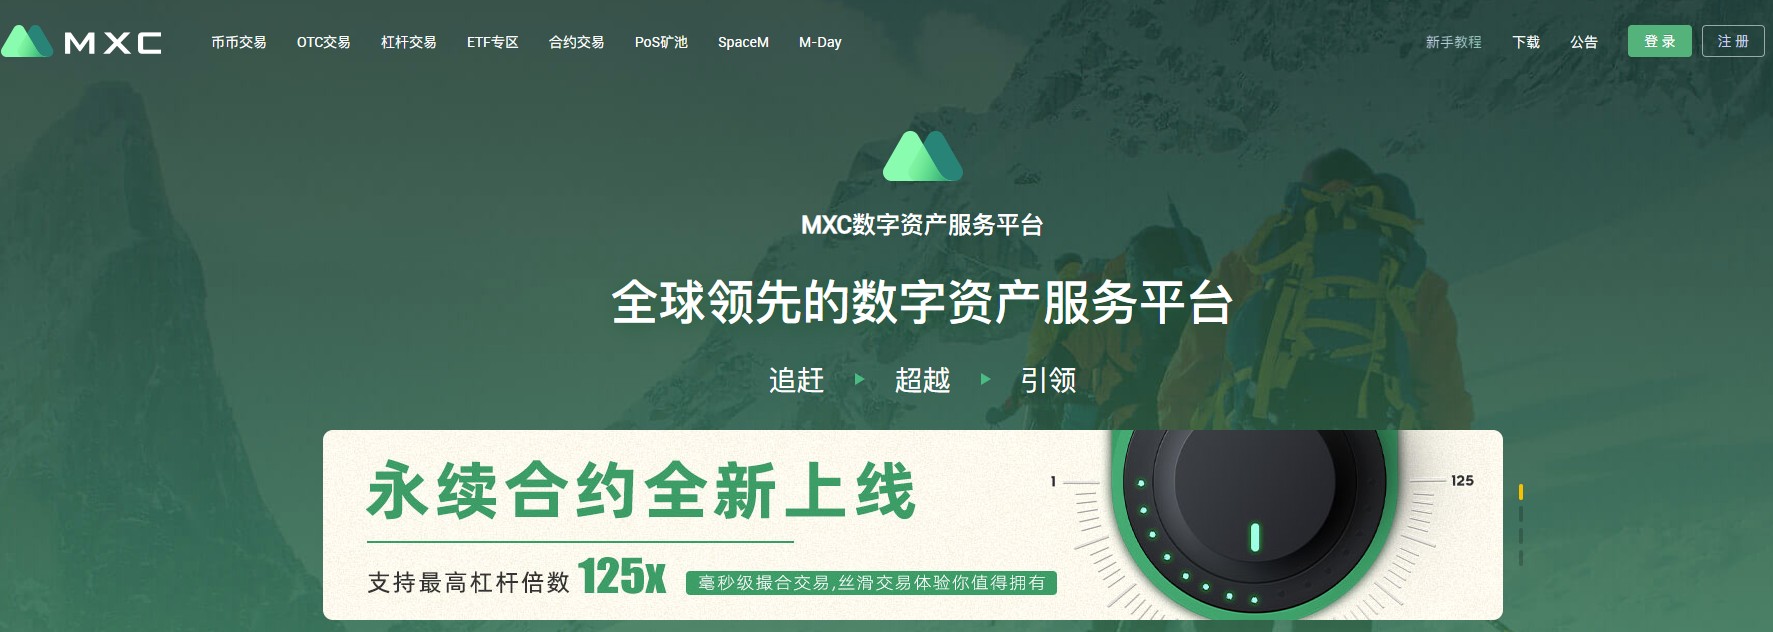 MXC抹茶新版合约上线 ，“稳”字当头，功能大幅优化